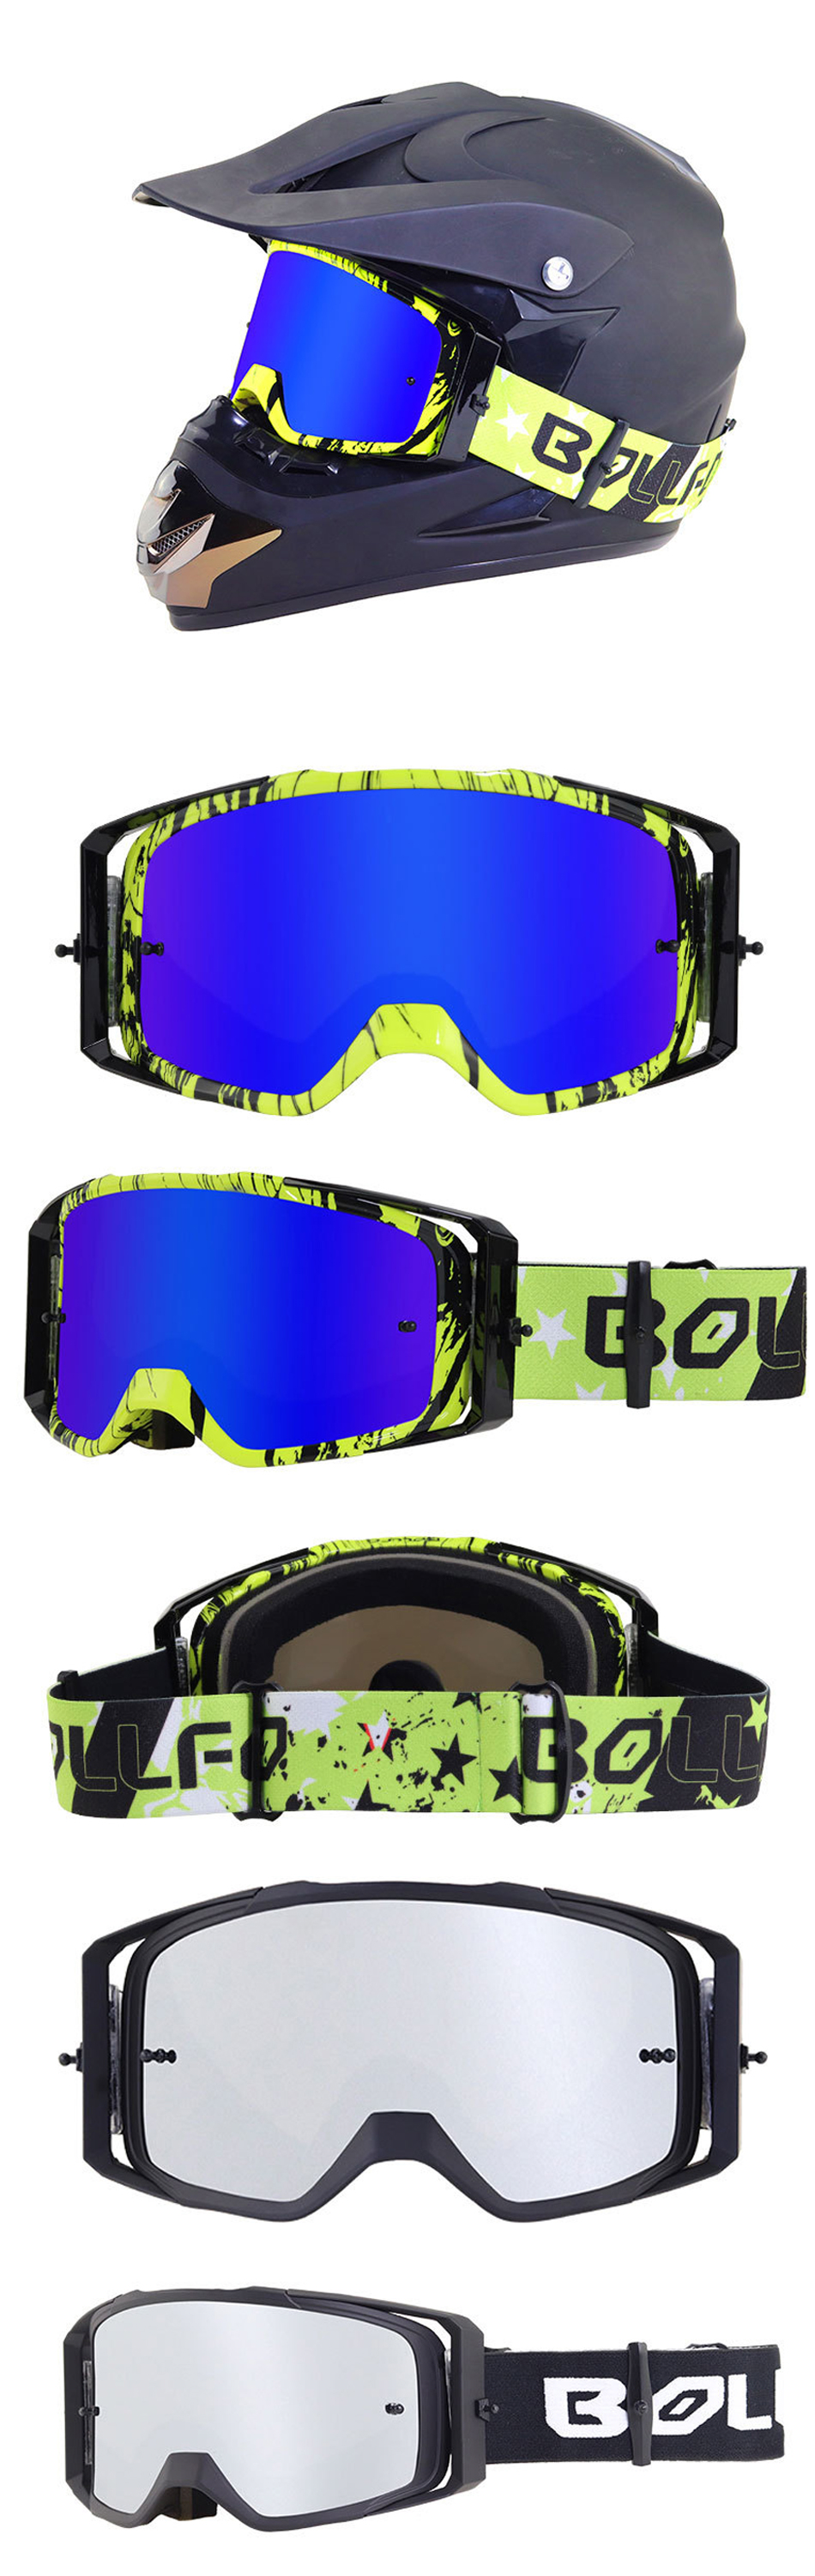 BOLLFO-Winter-Outdoor-Cycling-Snow-Sports-Skiing-Goggles-Anti-fog-Eyewear-Sunglasses-For-Men-Women-1754169-3